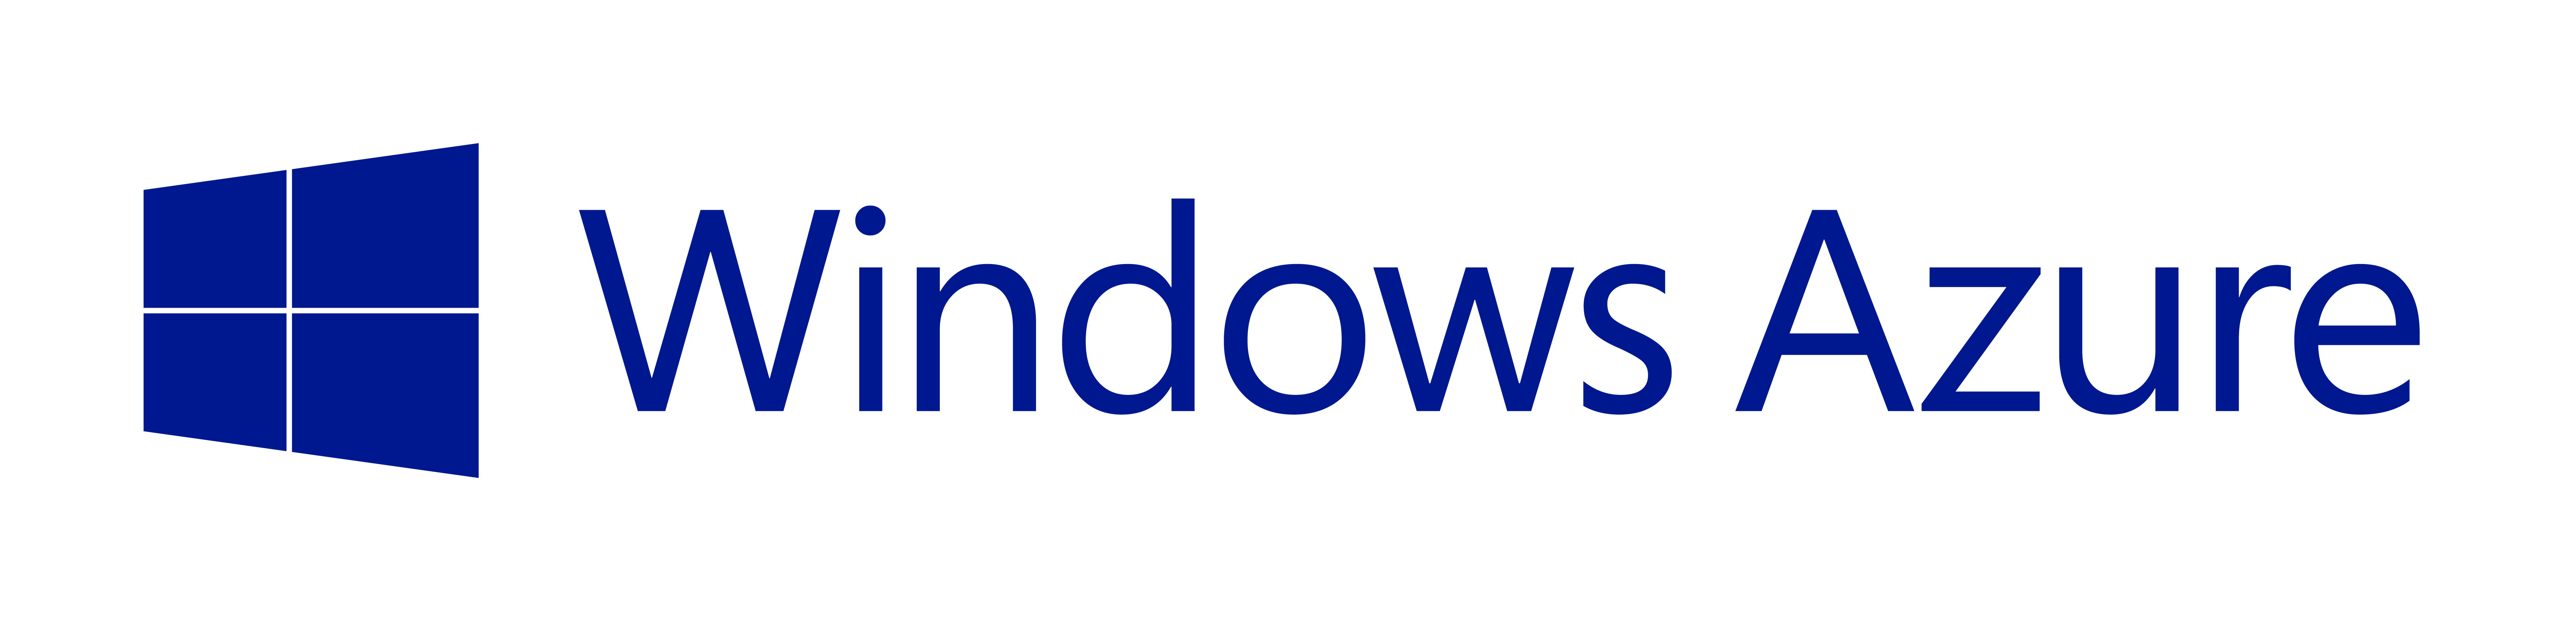 Windows Azure Active Directory Logo